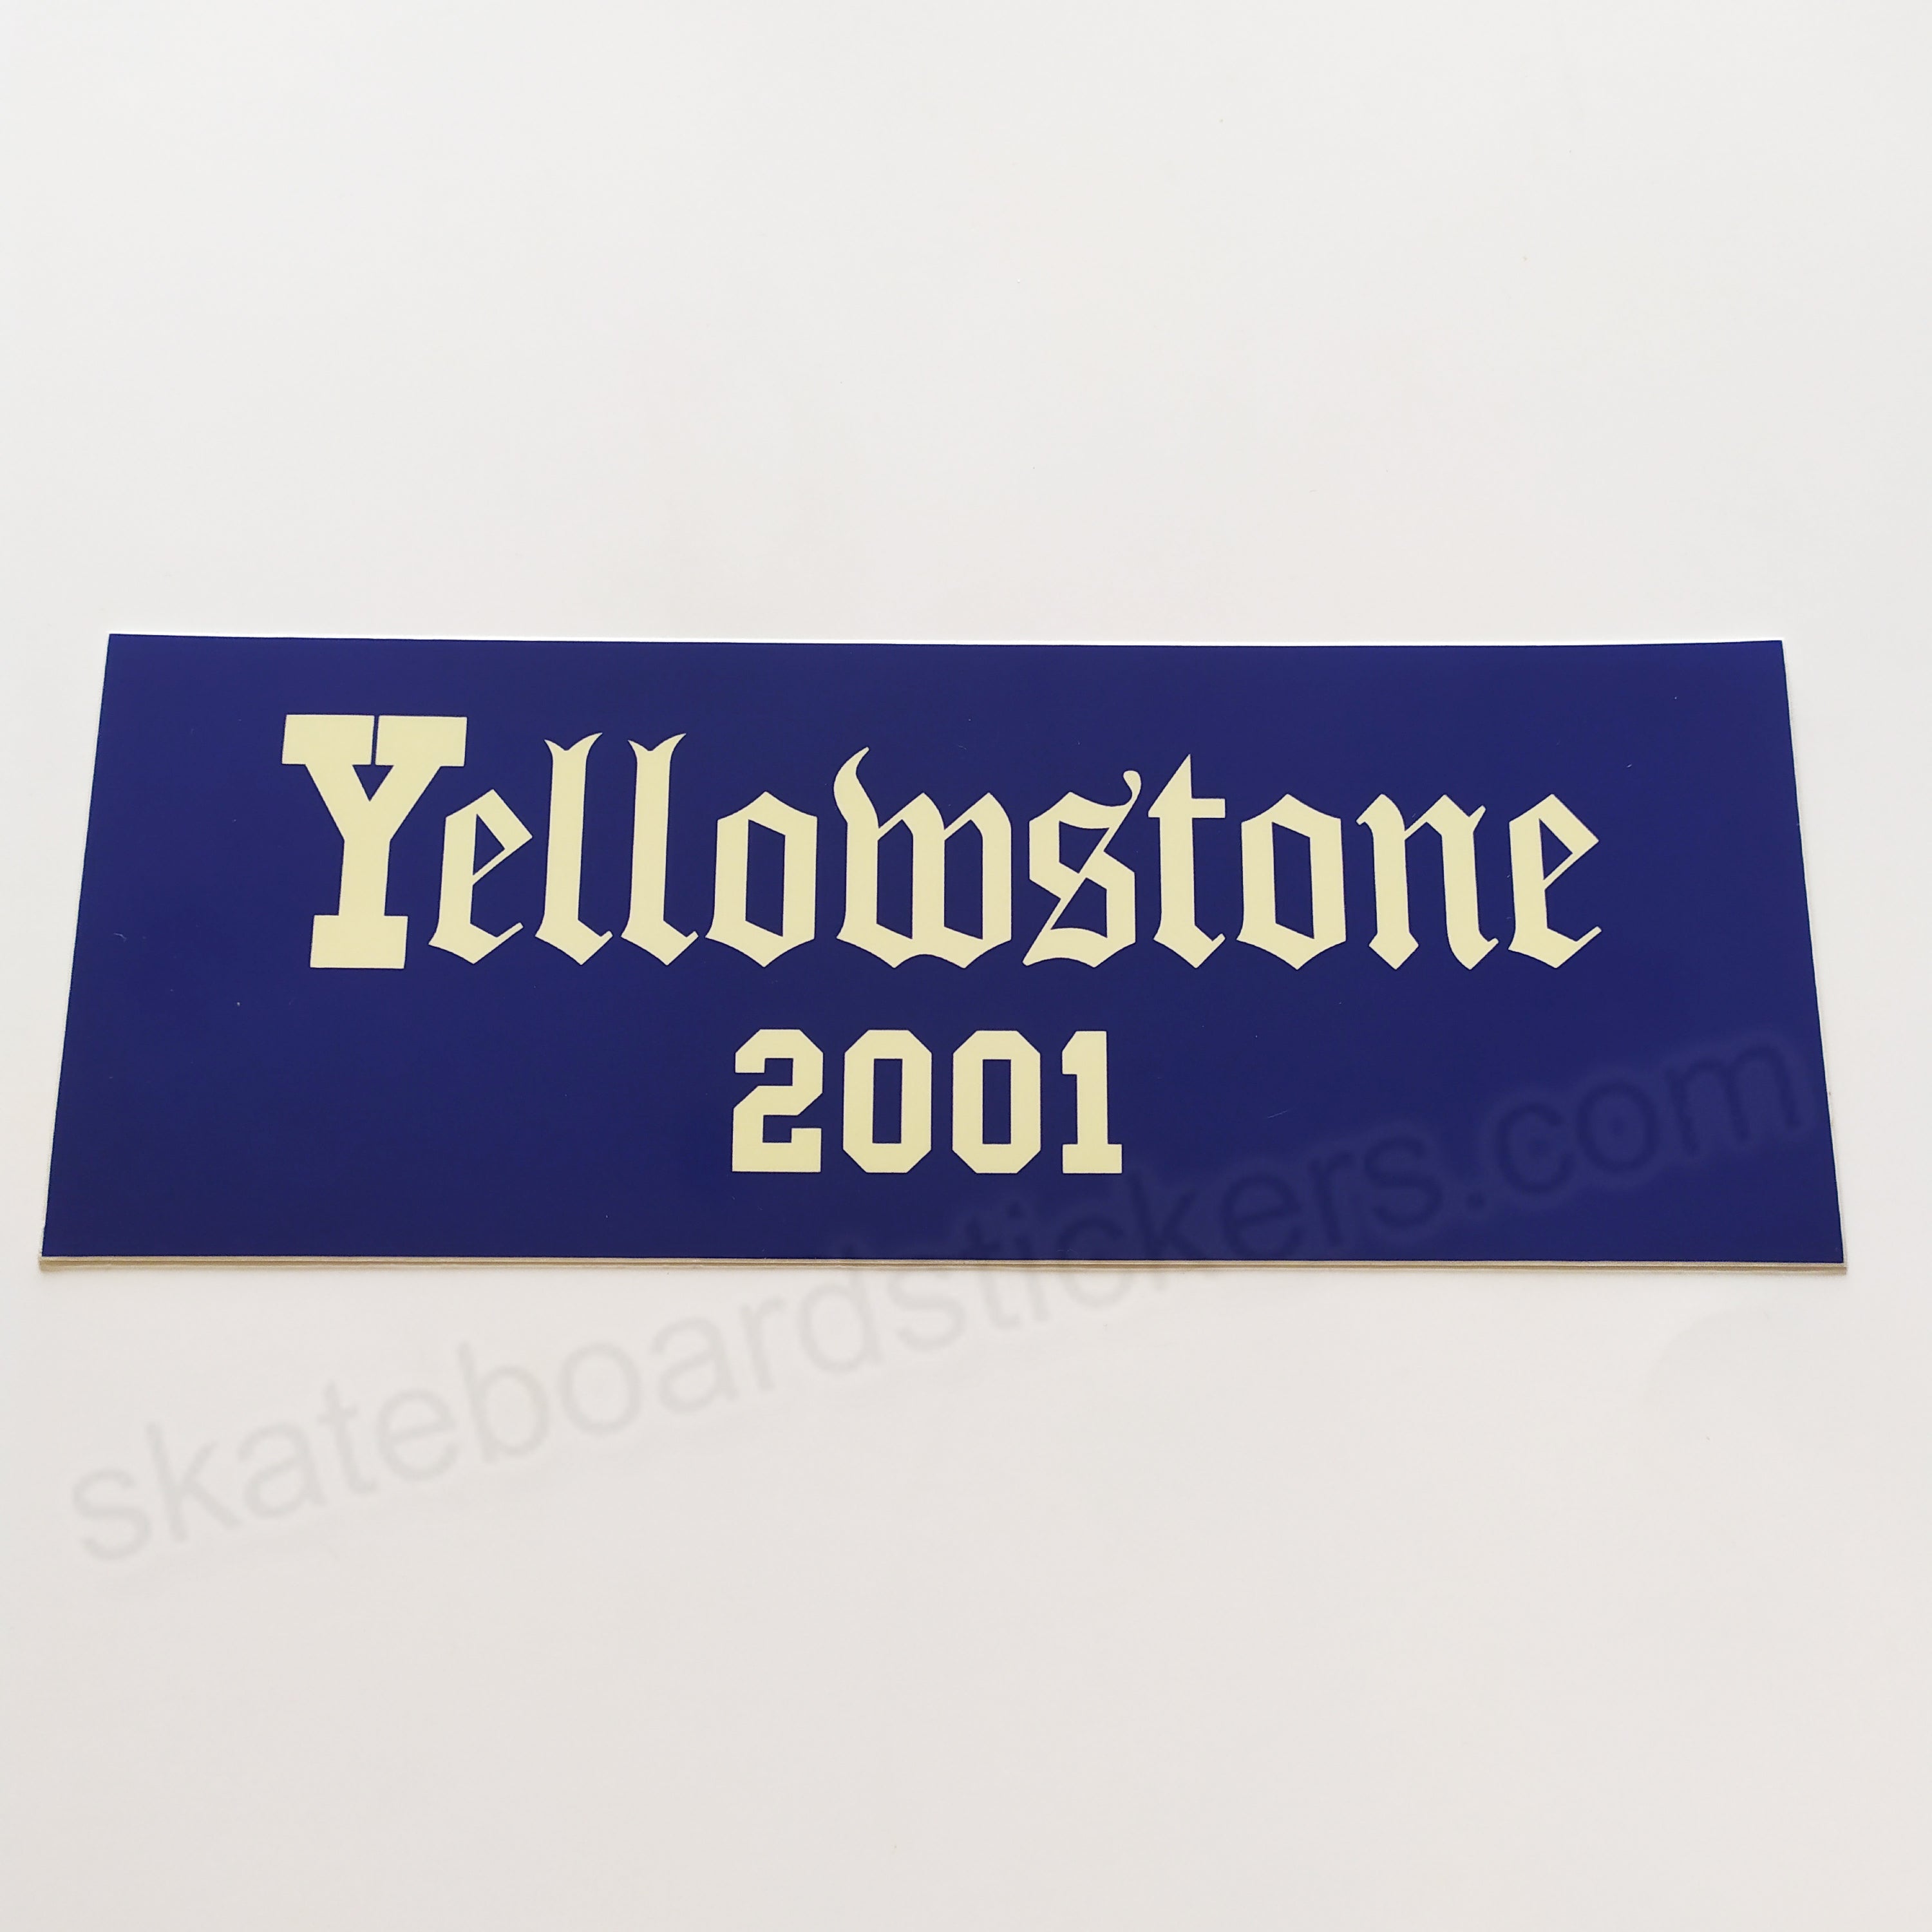 Grizzly Griptape Skateboard Sticker - XL Stamp - 20.5cm across approx - SkateboardStickers.com